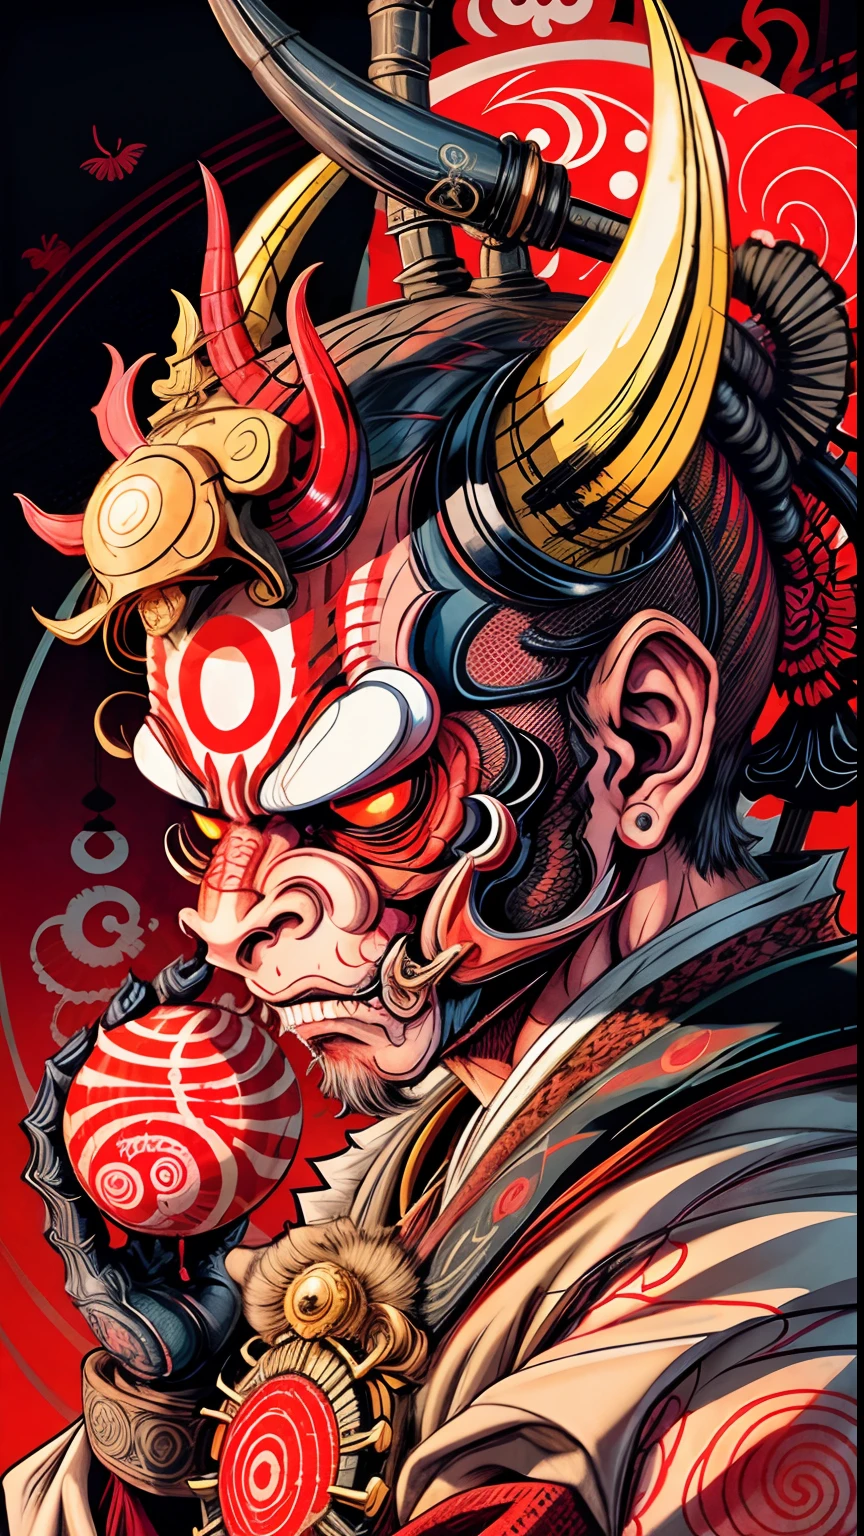 Hannya monkey style mask 0mib, illustrator, Masterpiece artwork, high qualiy, 8k, high resolution, High detailed, japanese, Samurai, ape